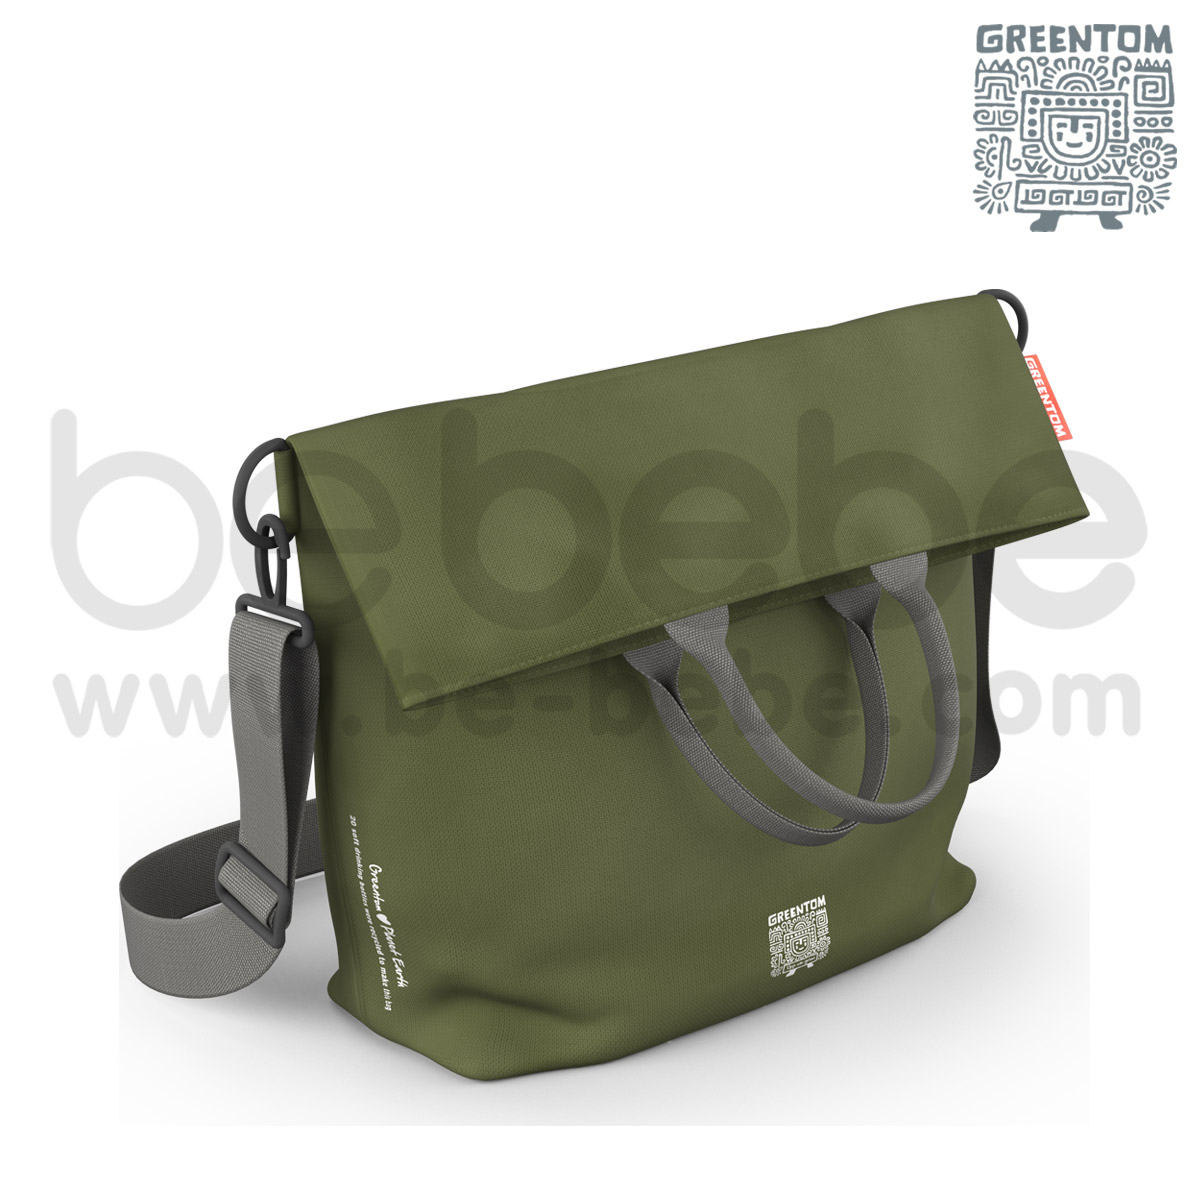 Greentom : กระเป๋าใส่ผ้าอ้อม Diaper Bag / เขียวขี้ม้า